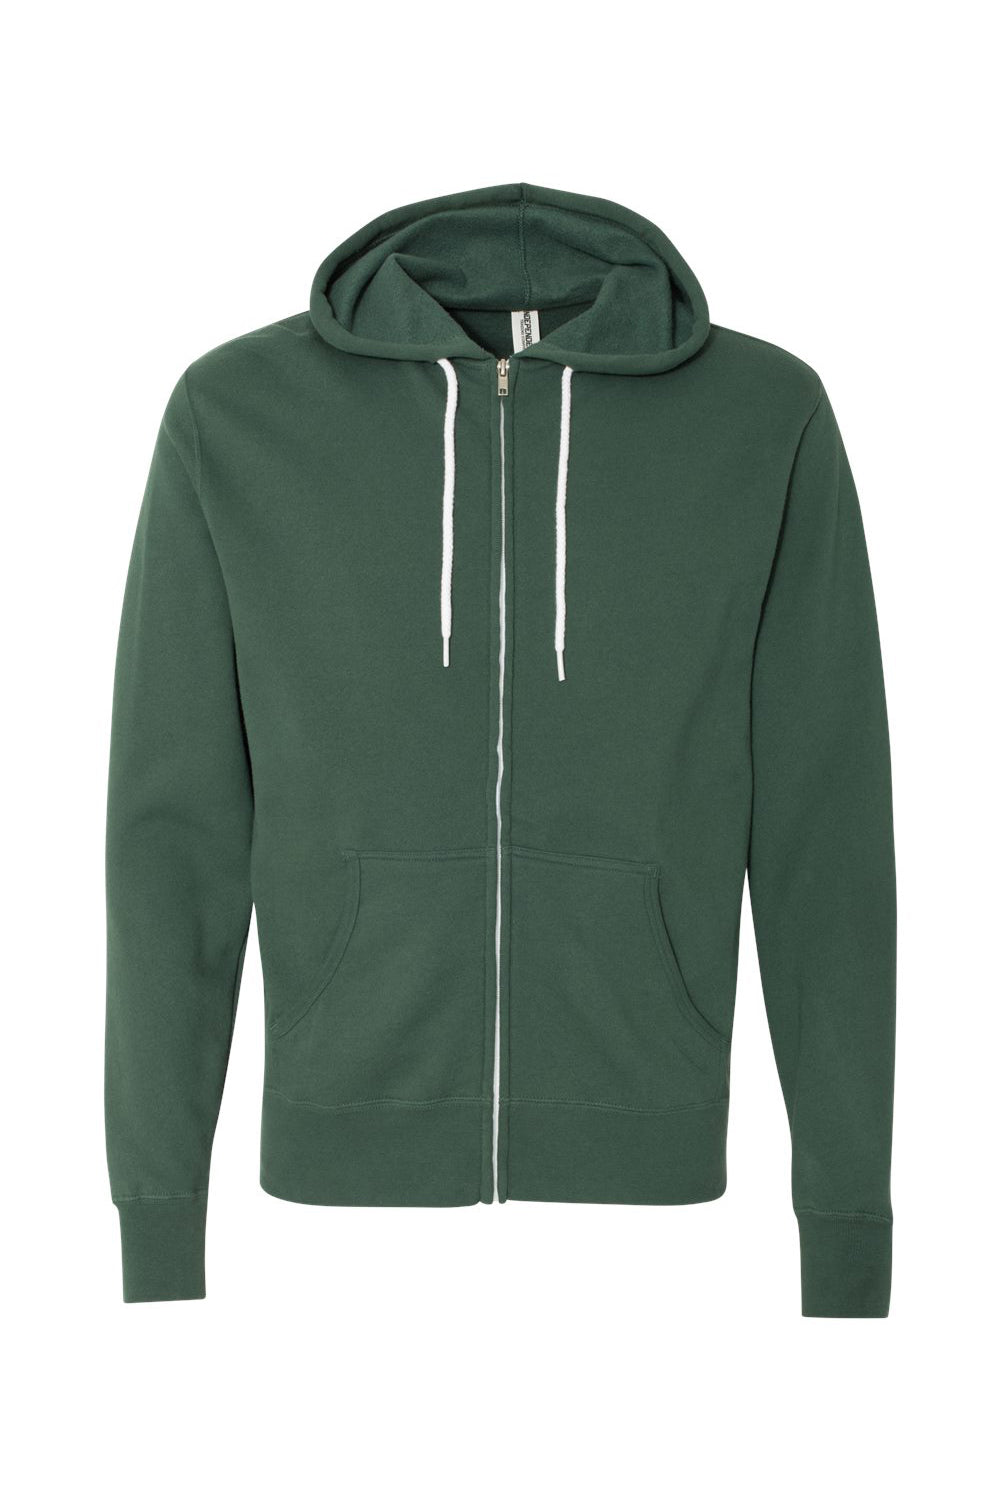 Independent Trading Co. AFX90UNZ Mens Full Zip Hooded Sweatshirt Hoodie Alpine Green Flat Front